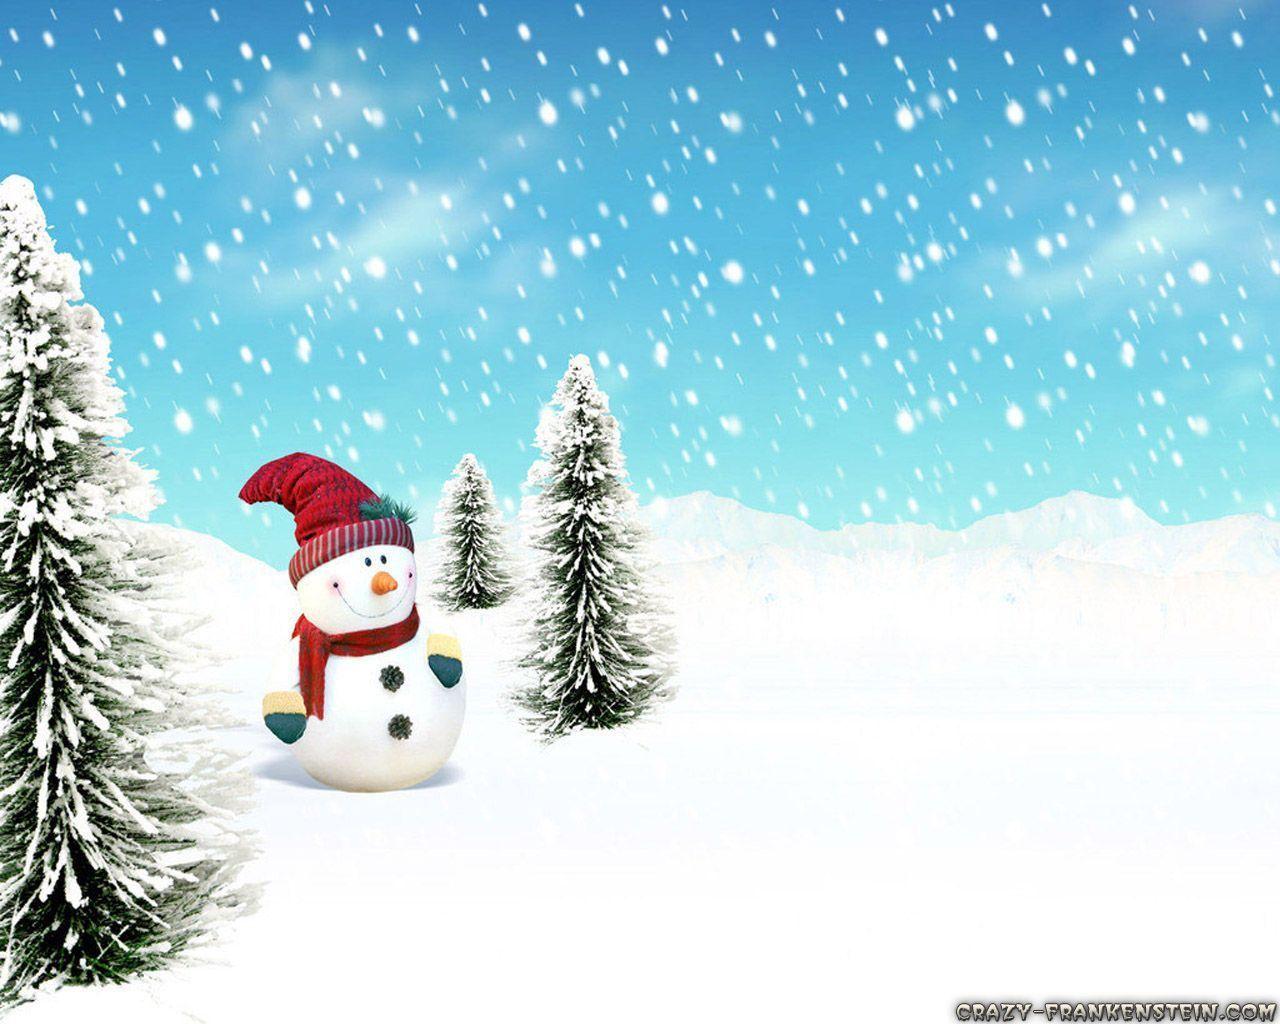 Wallpaper For > Christmas Snowman Wallpaper